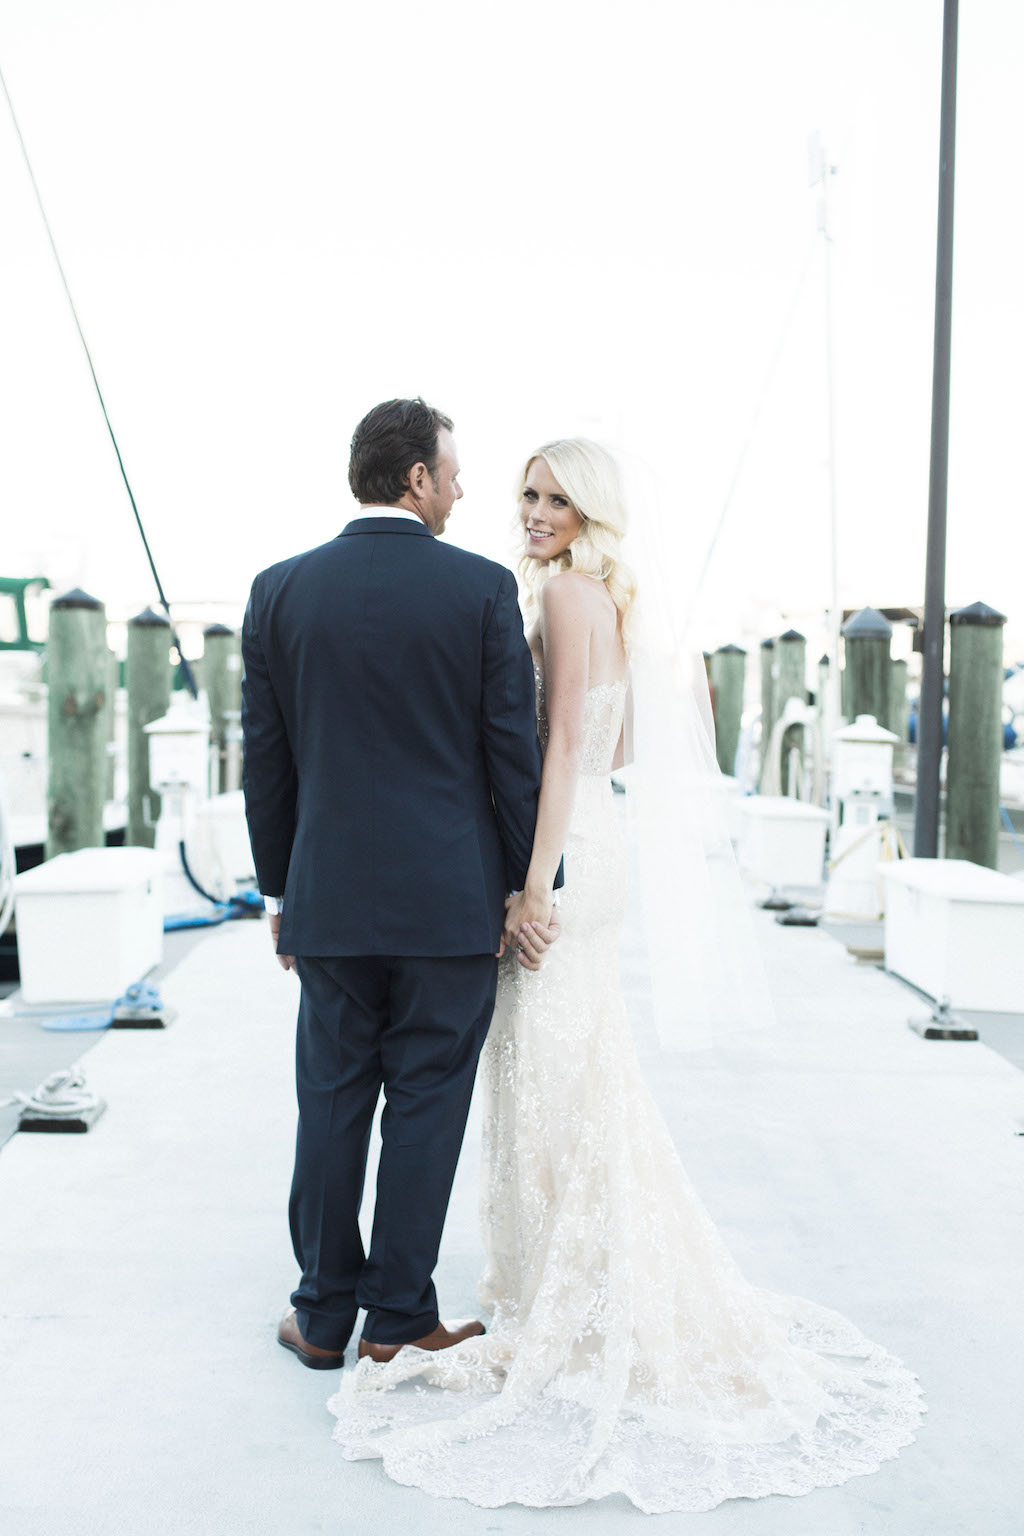 Outdoor Waterfront Bride and Groom Wedding Portrait on Dock | Sarasota Wedding Venue Sarasota Yacht Club